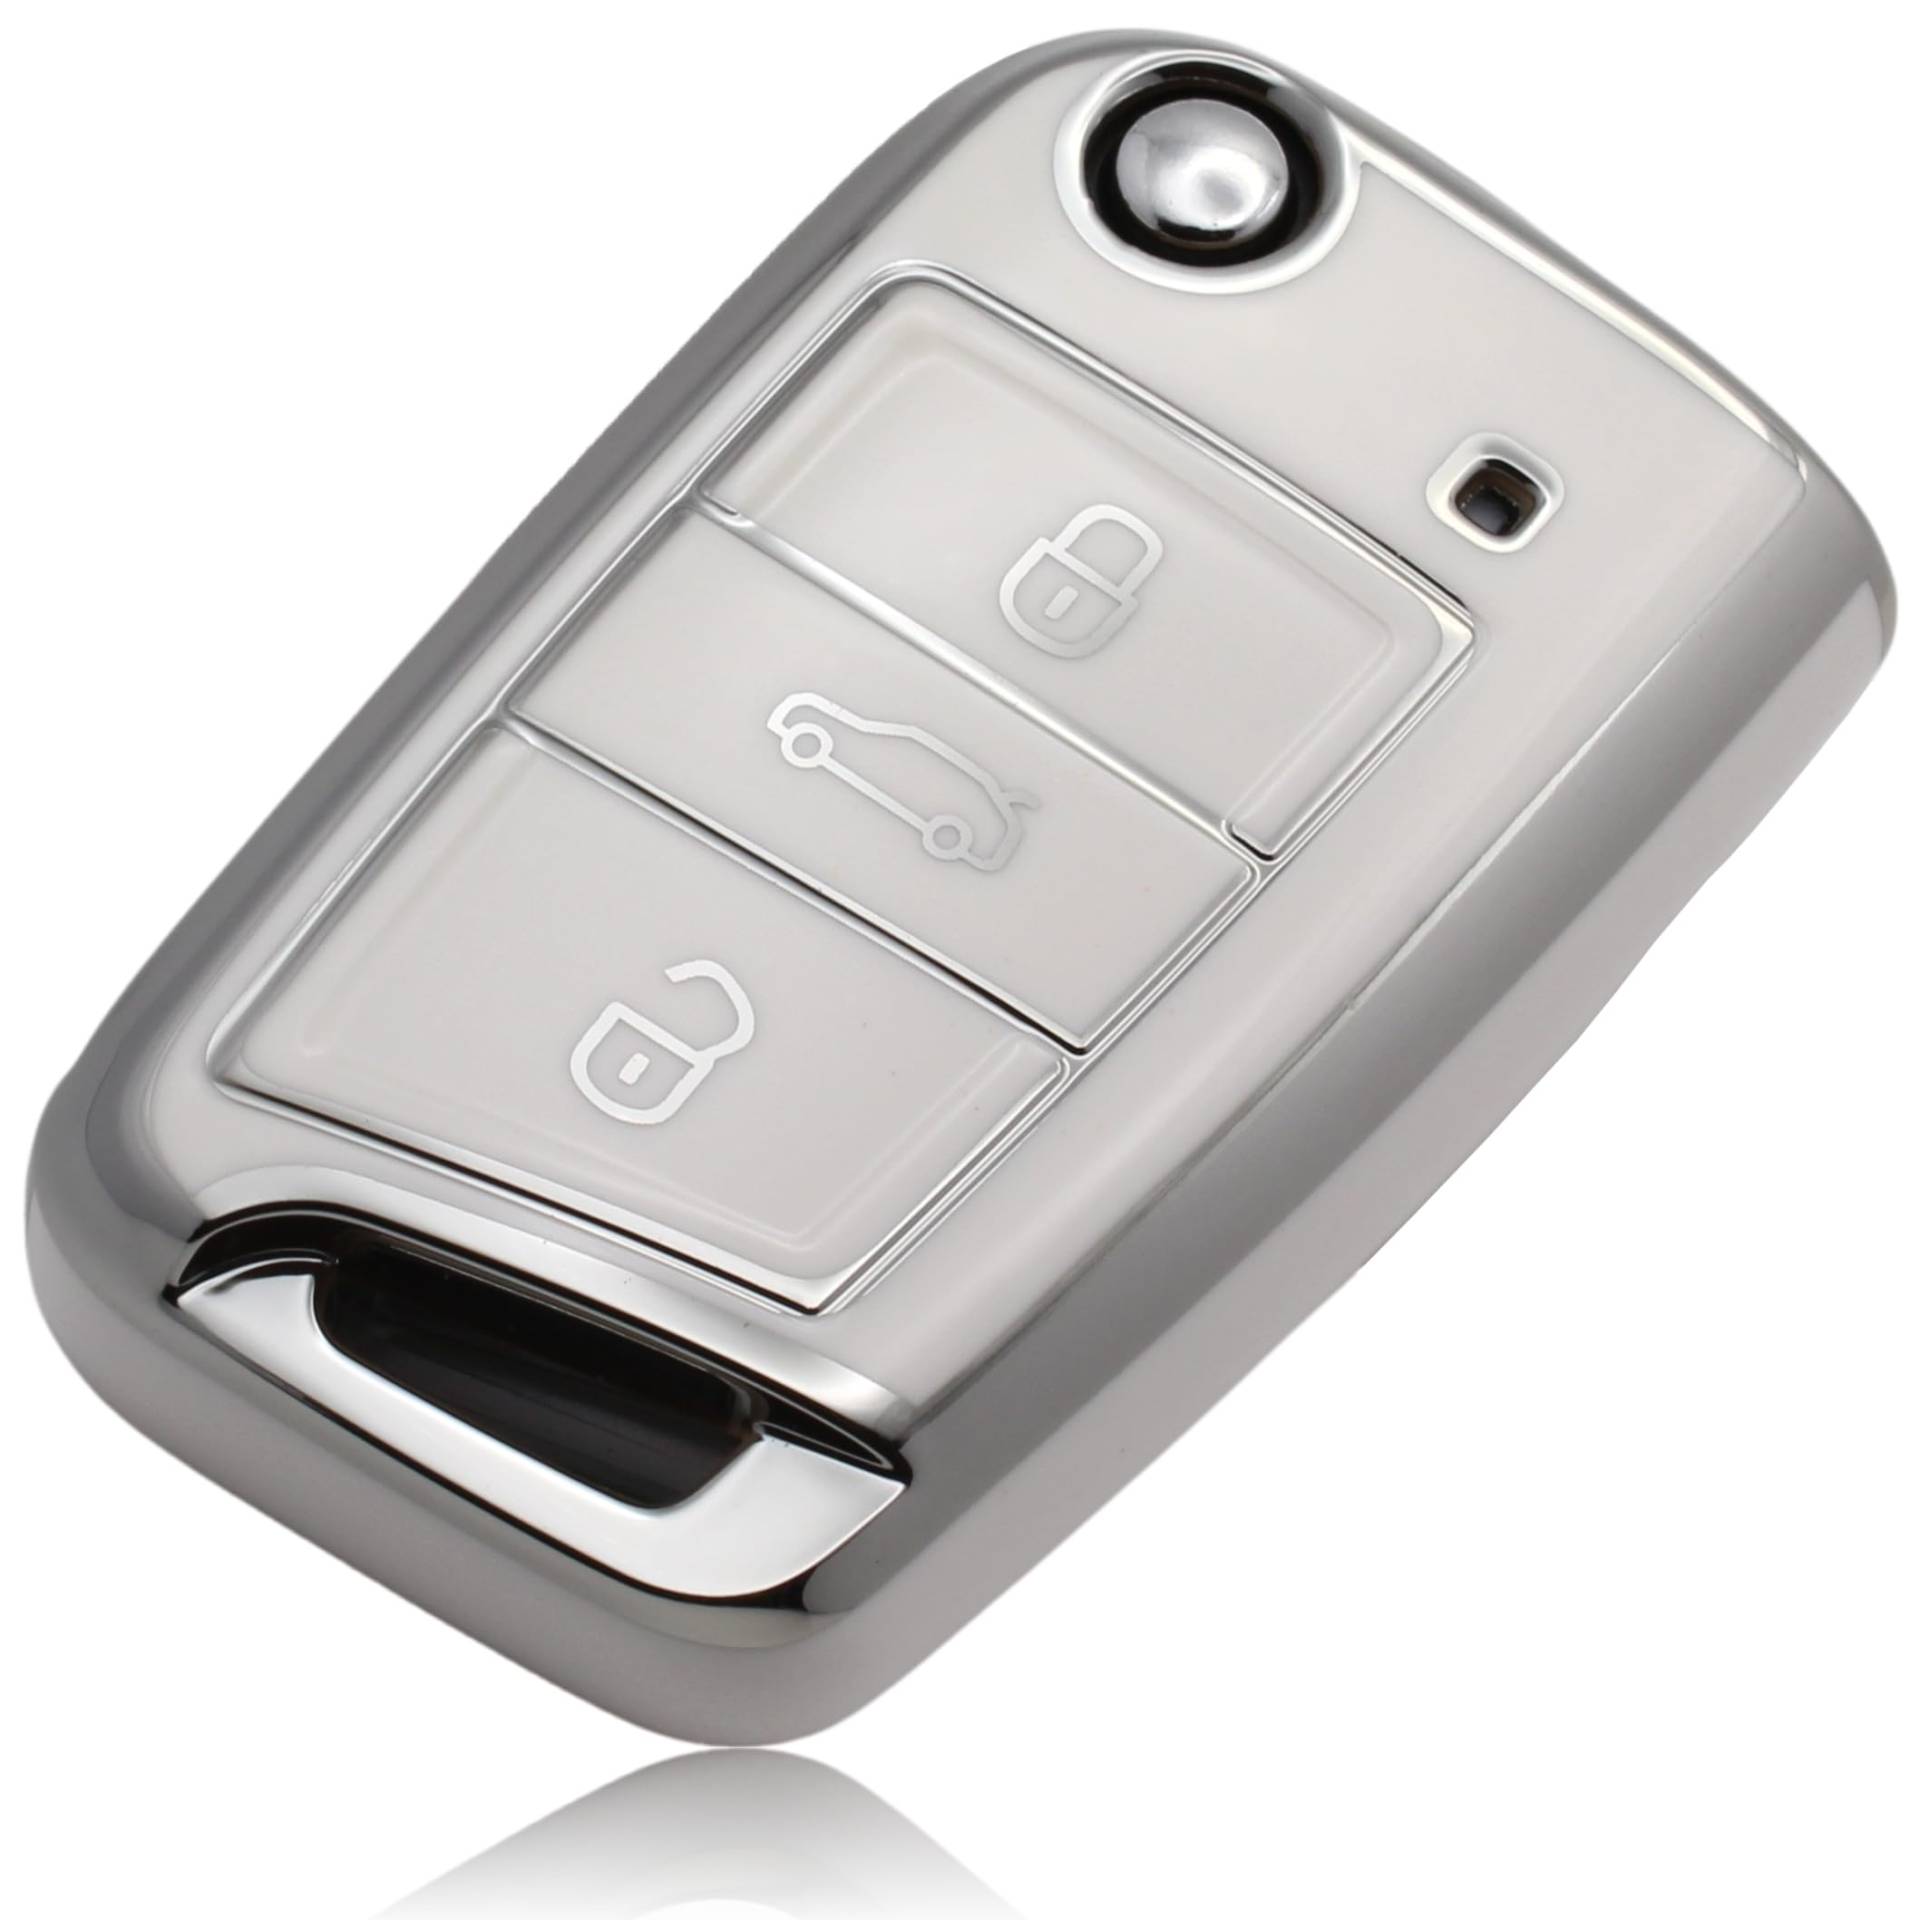 FOAMO Autoschlüssel Hülle Kompatibel mit VW Golf 7, SEAT, Skoda Autoschlüssel TPU Schlüssel-Hülle Schutz-Hülle für Autoschlüssel Weiß-Silber von FOAMO